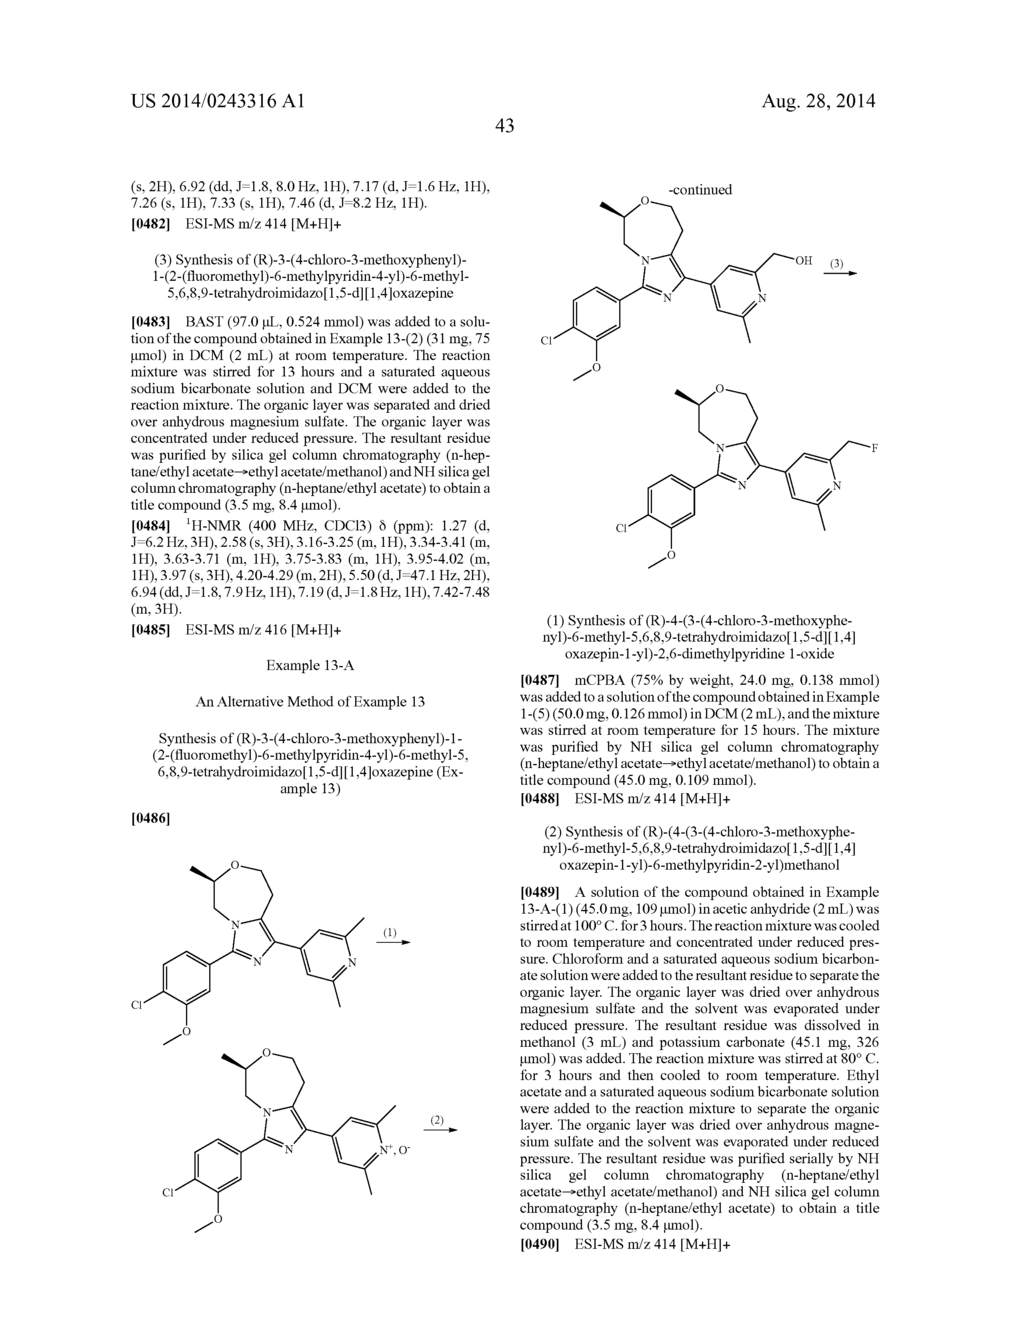 Tetrahydroimidazo(1,5-D)[1,4]Oxazepine Derivative - diagram, schematic, and image 44